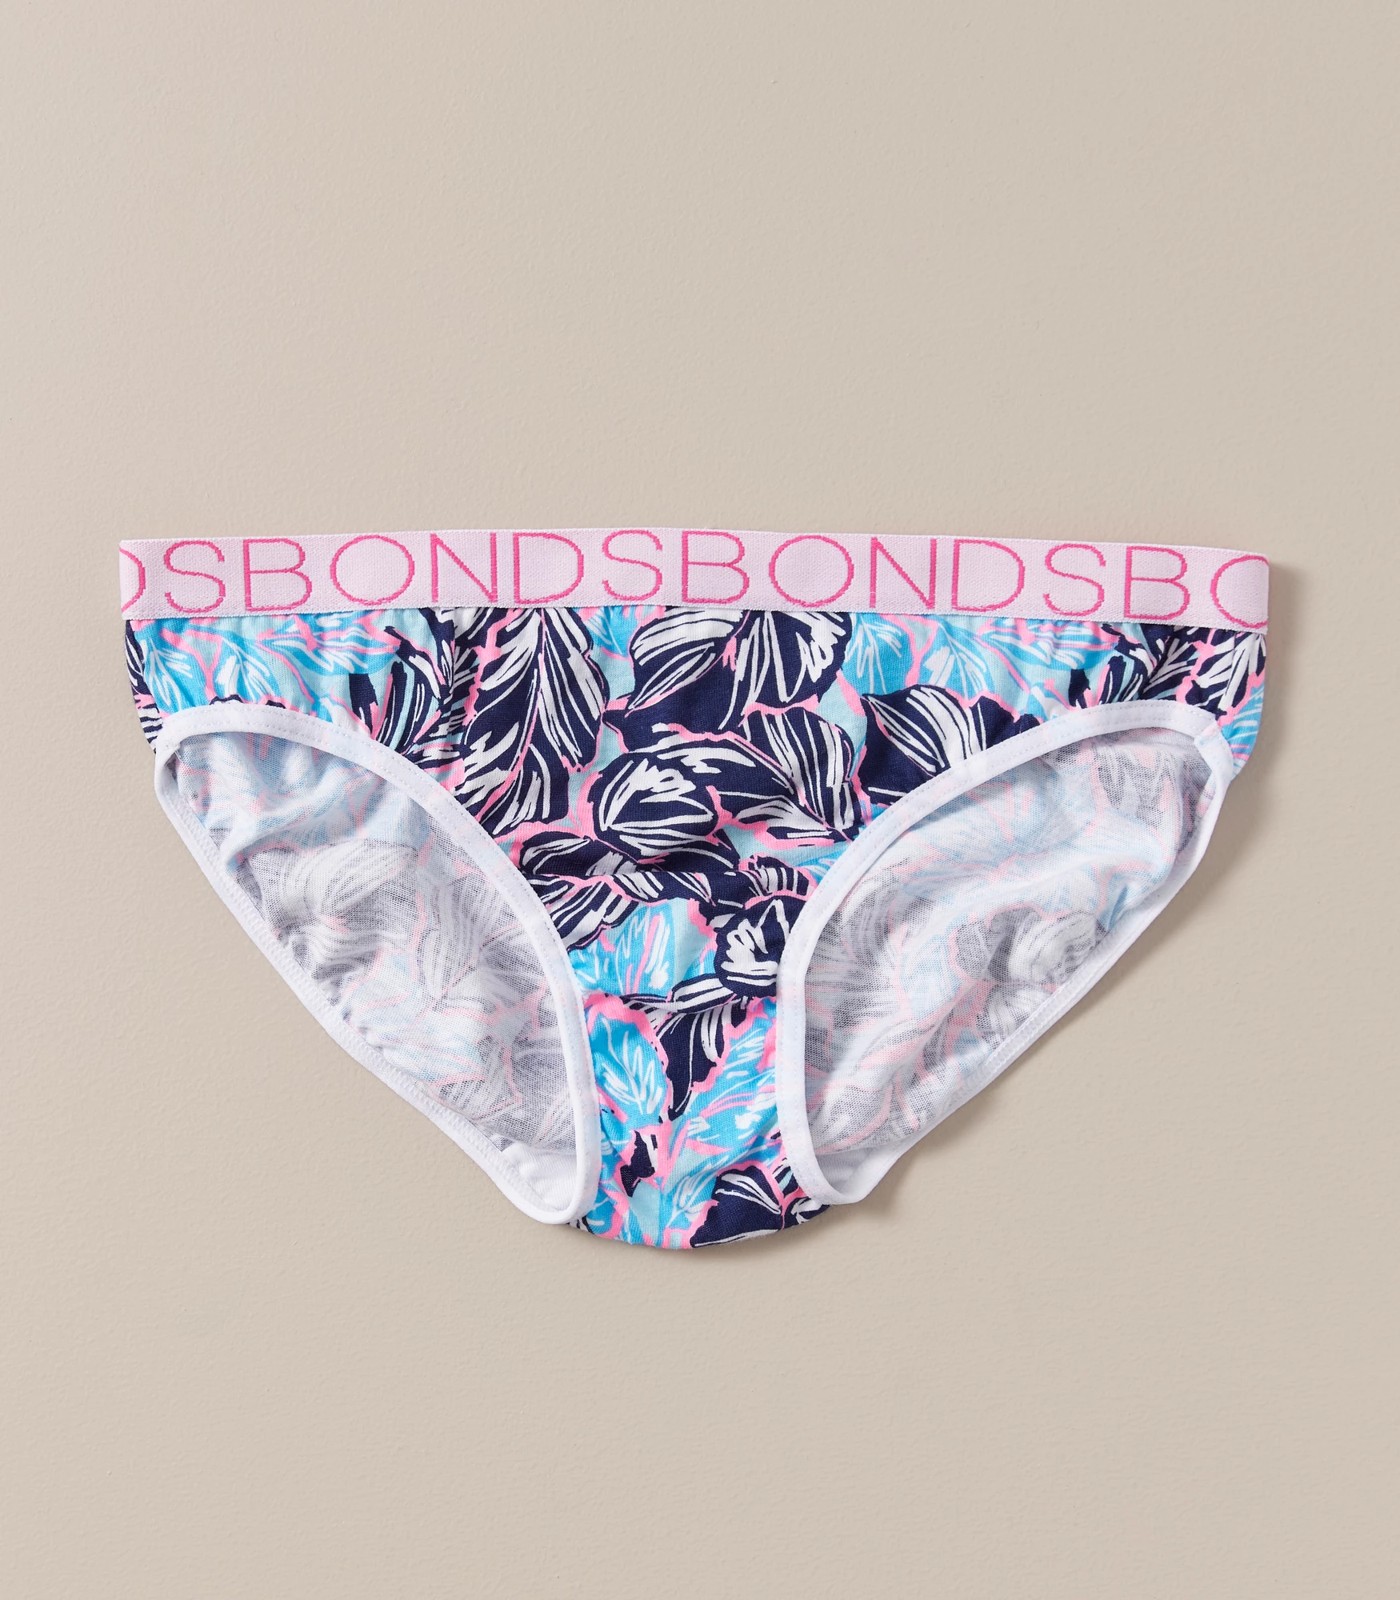 Bonds Girls Bikini 5 Pack, Girls Underwear